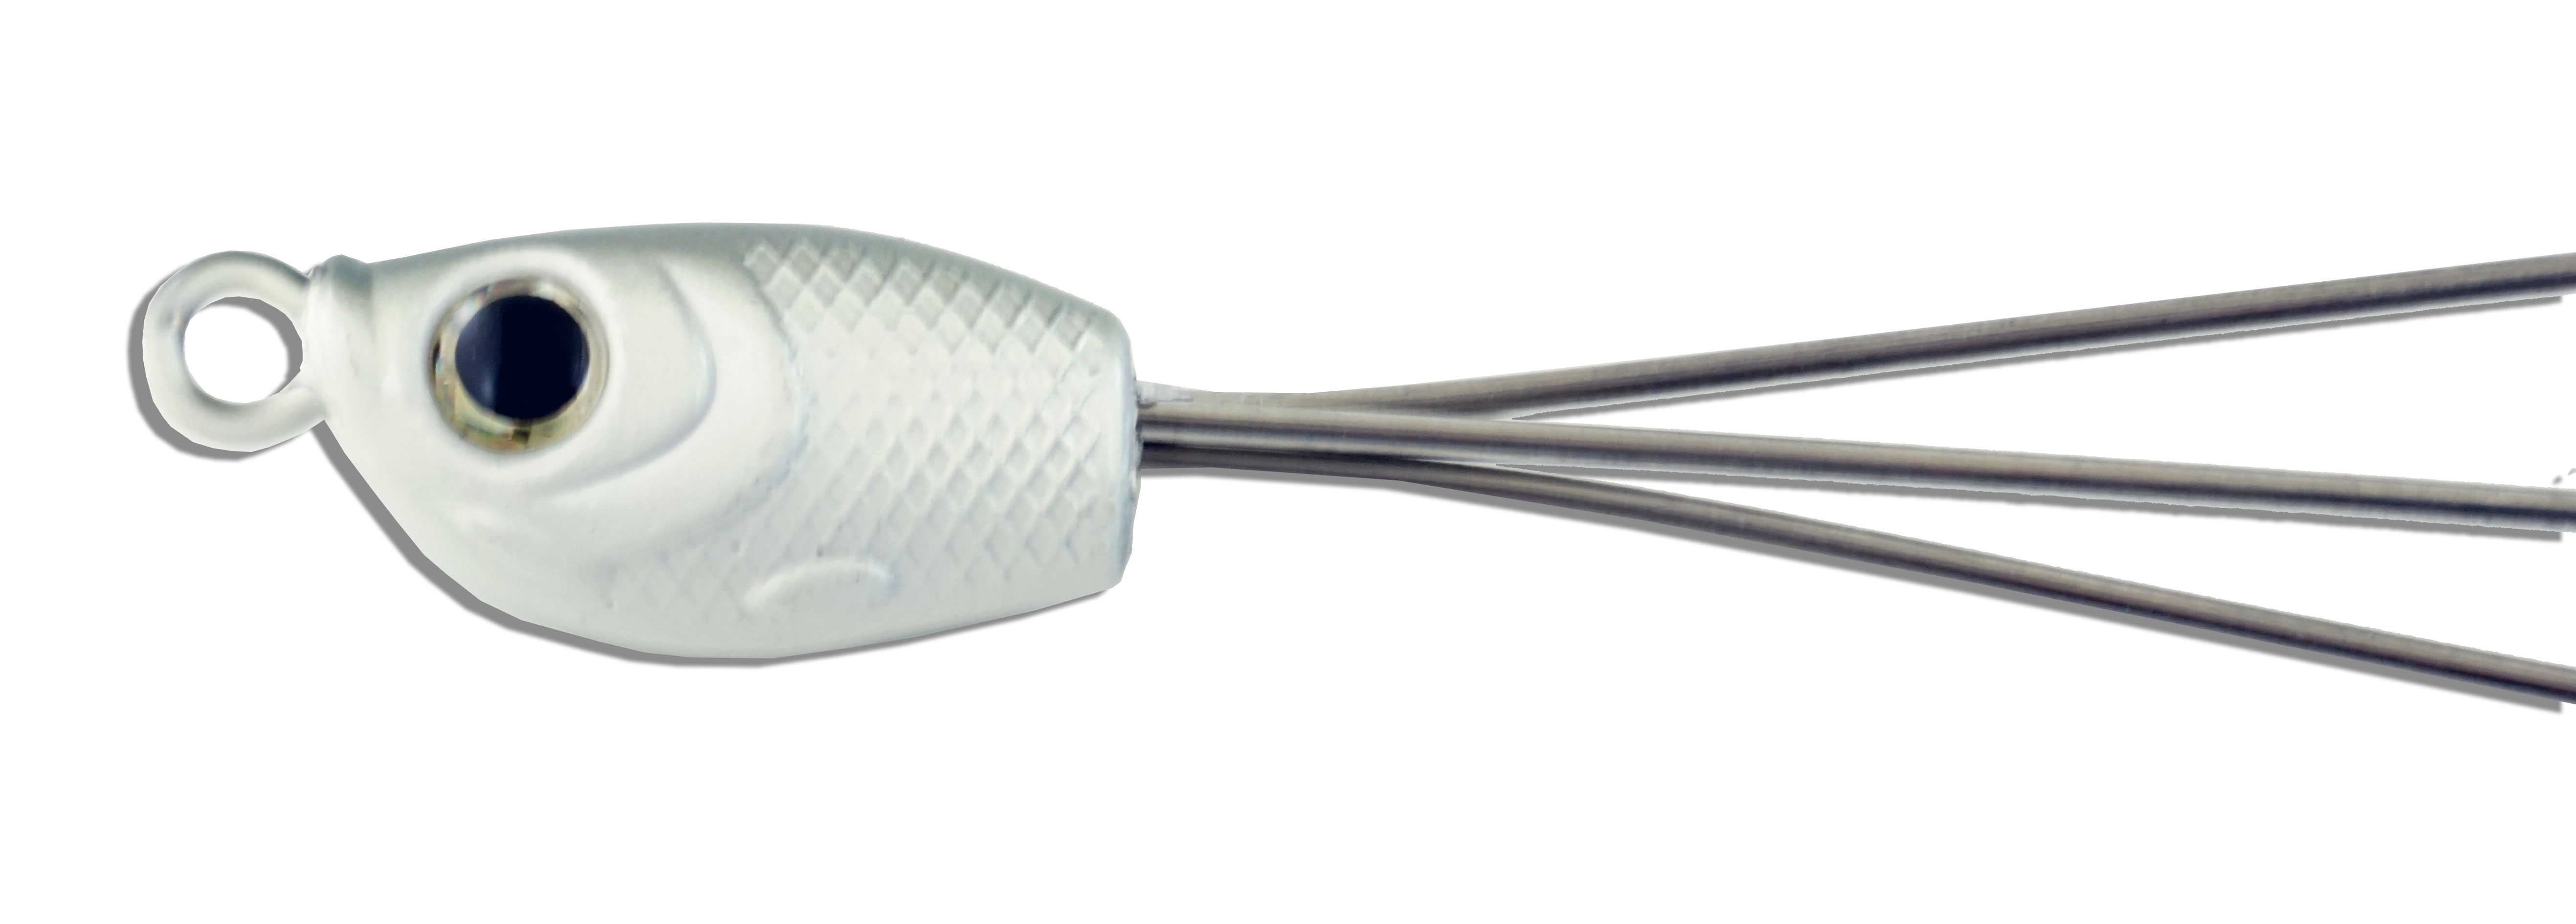 Umbrella Rig 3 Arm with 40g Gray/White Head - Click Image to Close